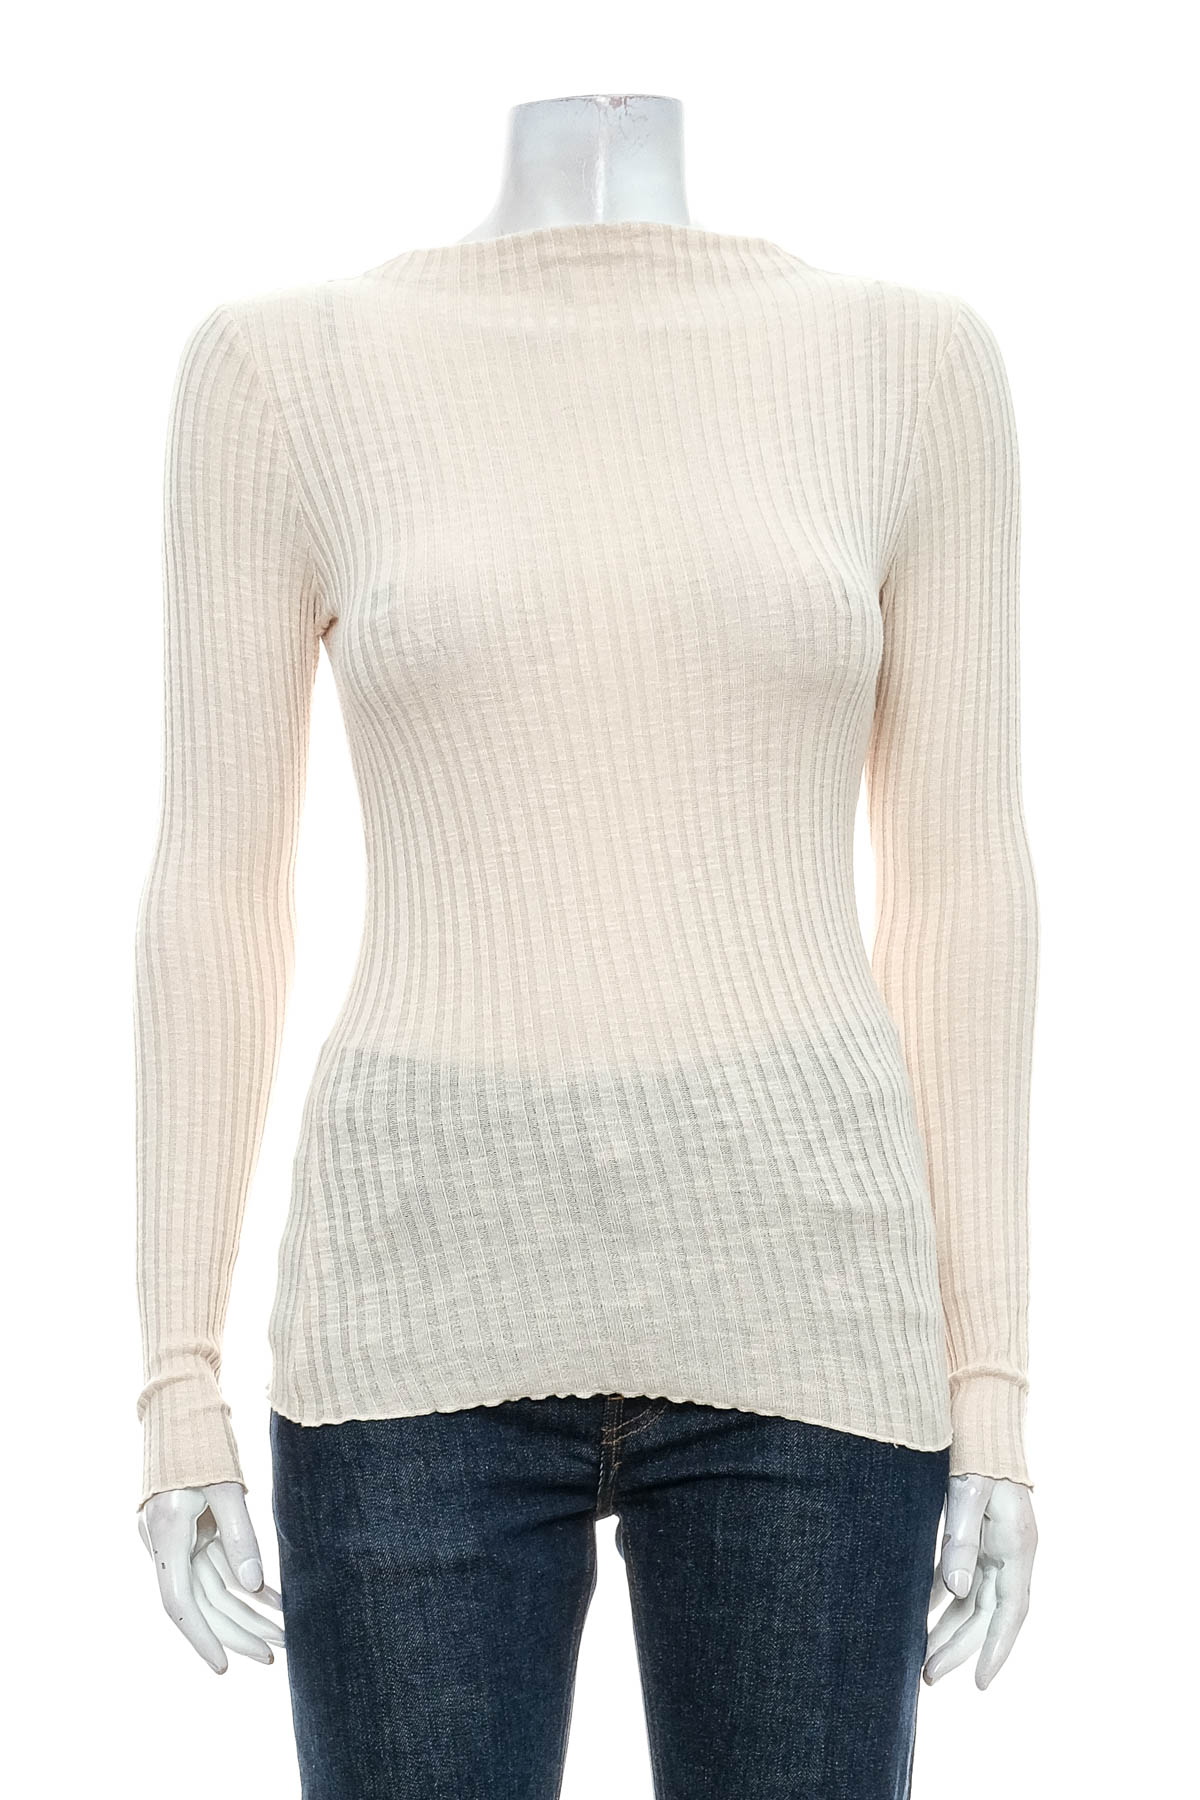 Women's sweater - Pimkie - 0